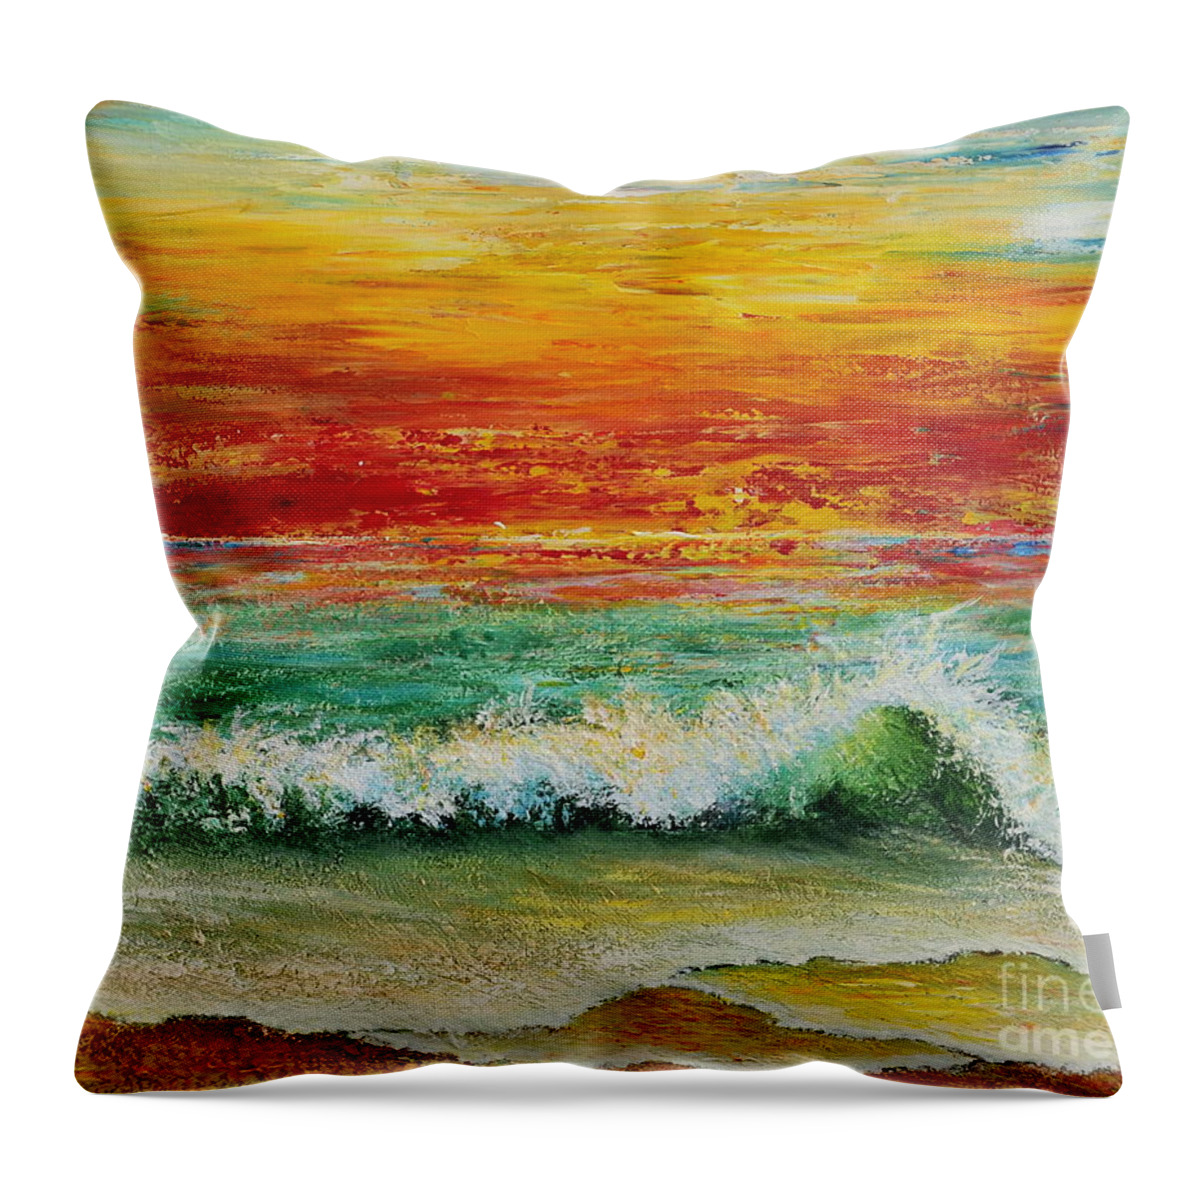 Palette Knife Throw Pillow featuring the painting Sunset Breeze by Teresa Wegrzyn